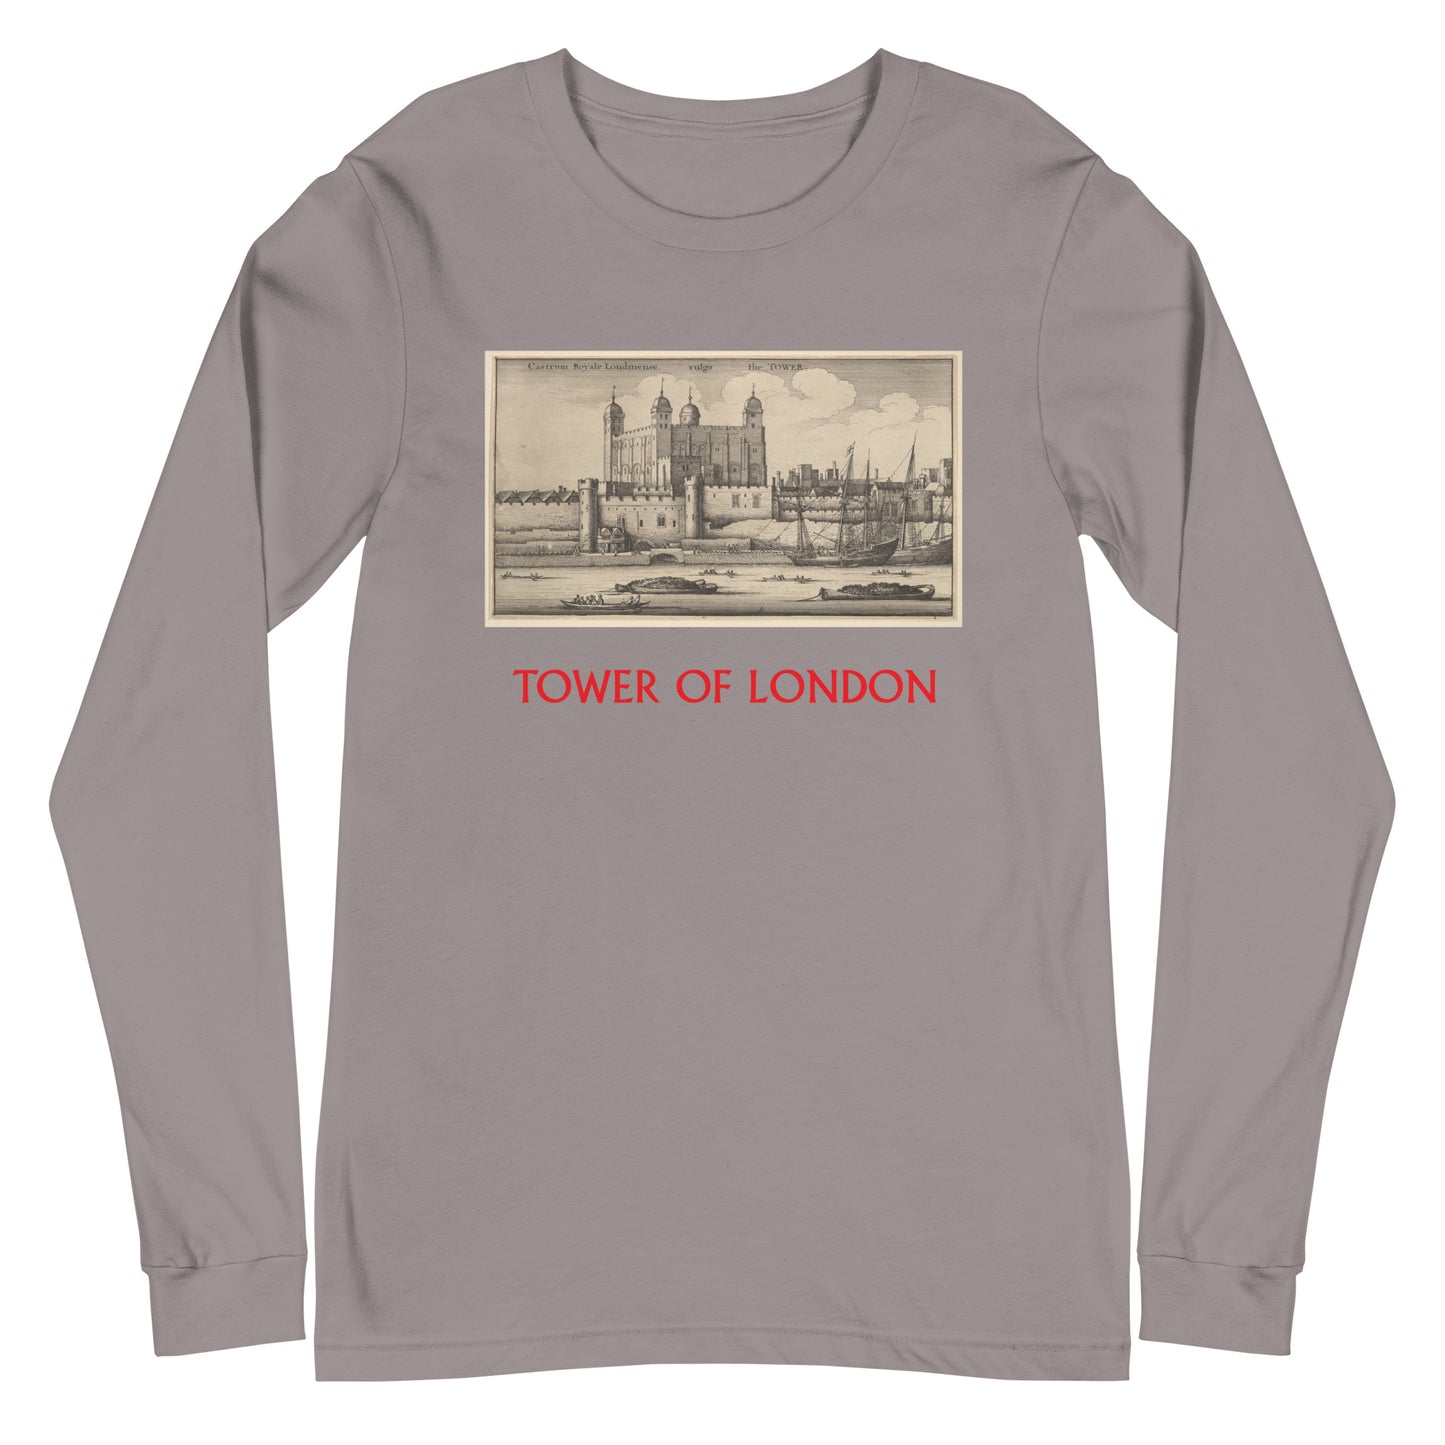 Tower of London unisex long-sleeve tee